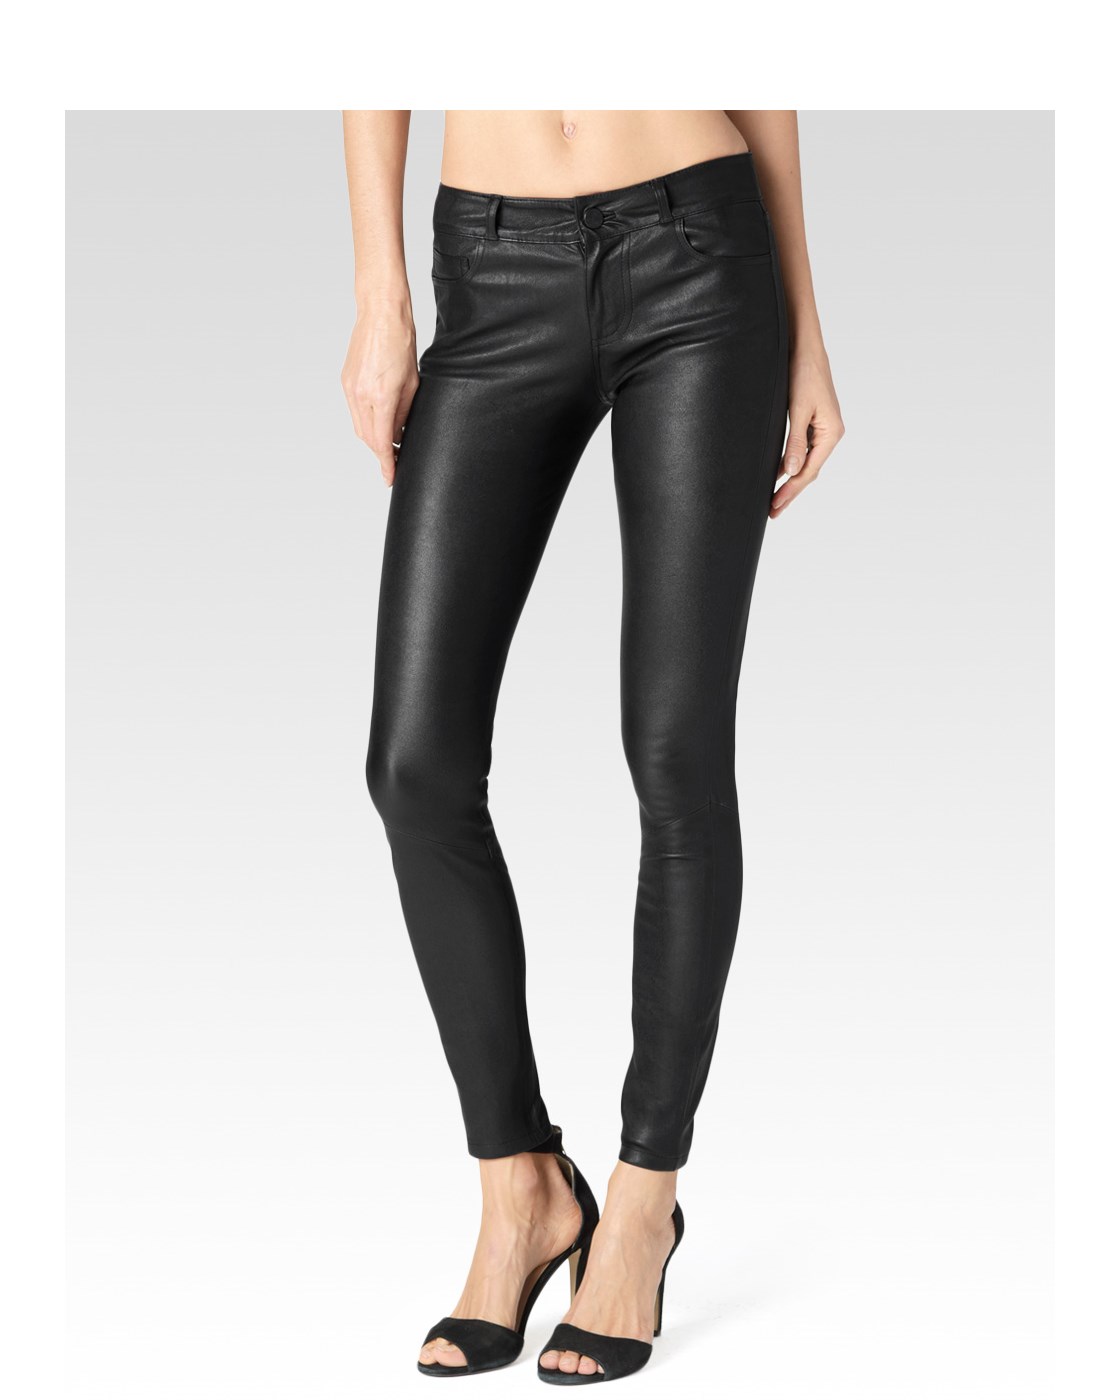 leather jeans paige® | verdugo pant - black leather KOOIGGH